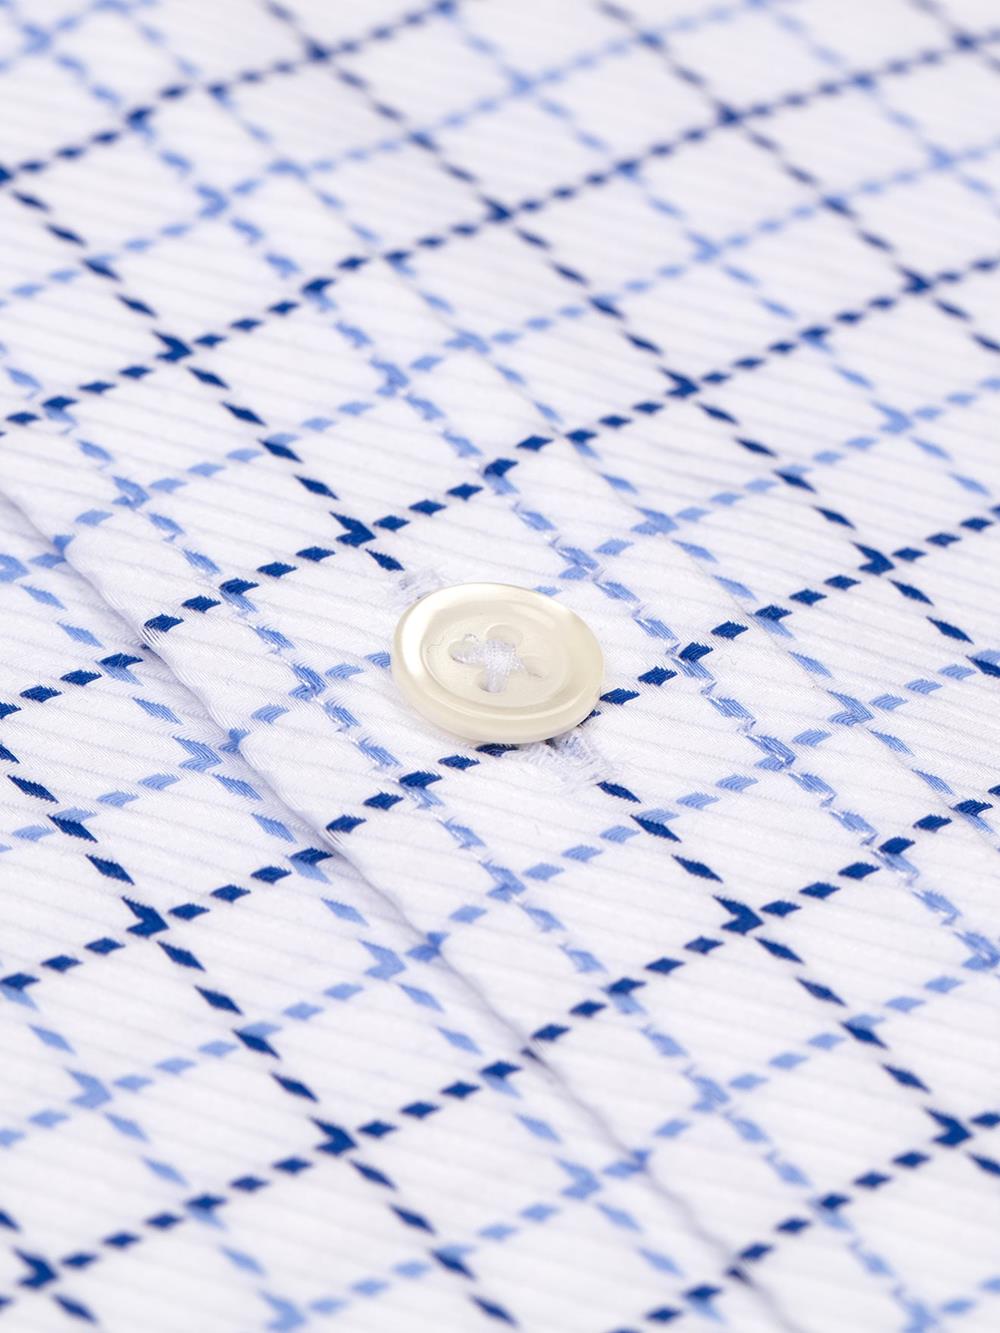 Sean navy and sky blue checked shirt - Button-down collar